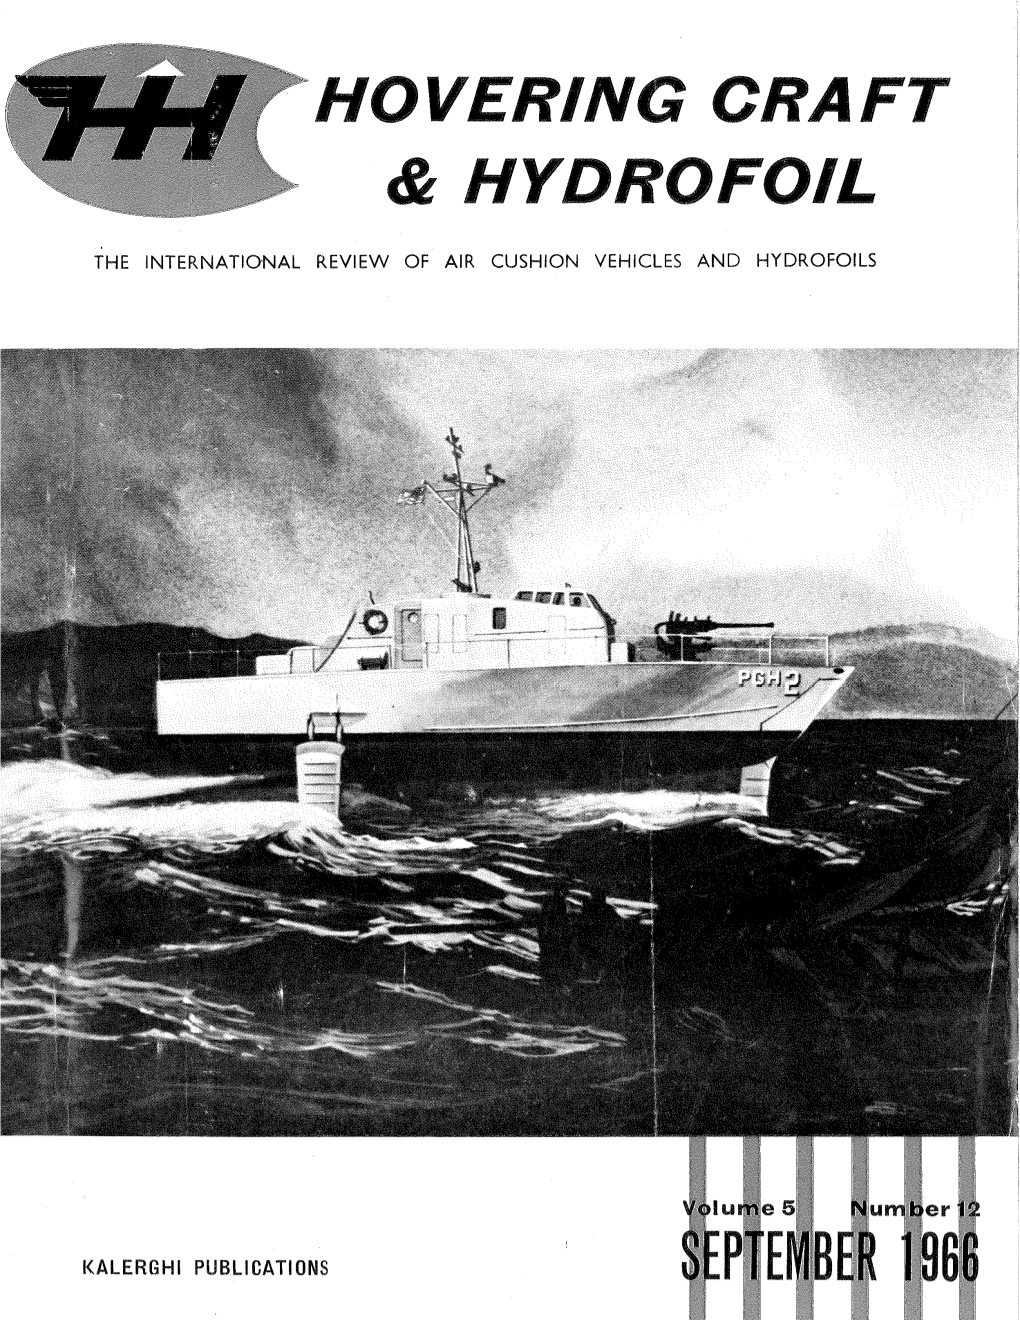 Hovering Craft & Hydrofoil Magazine September 1966 Volume 5 Number